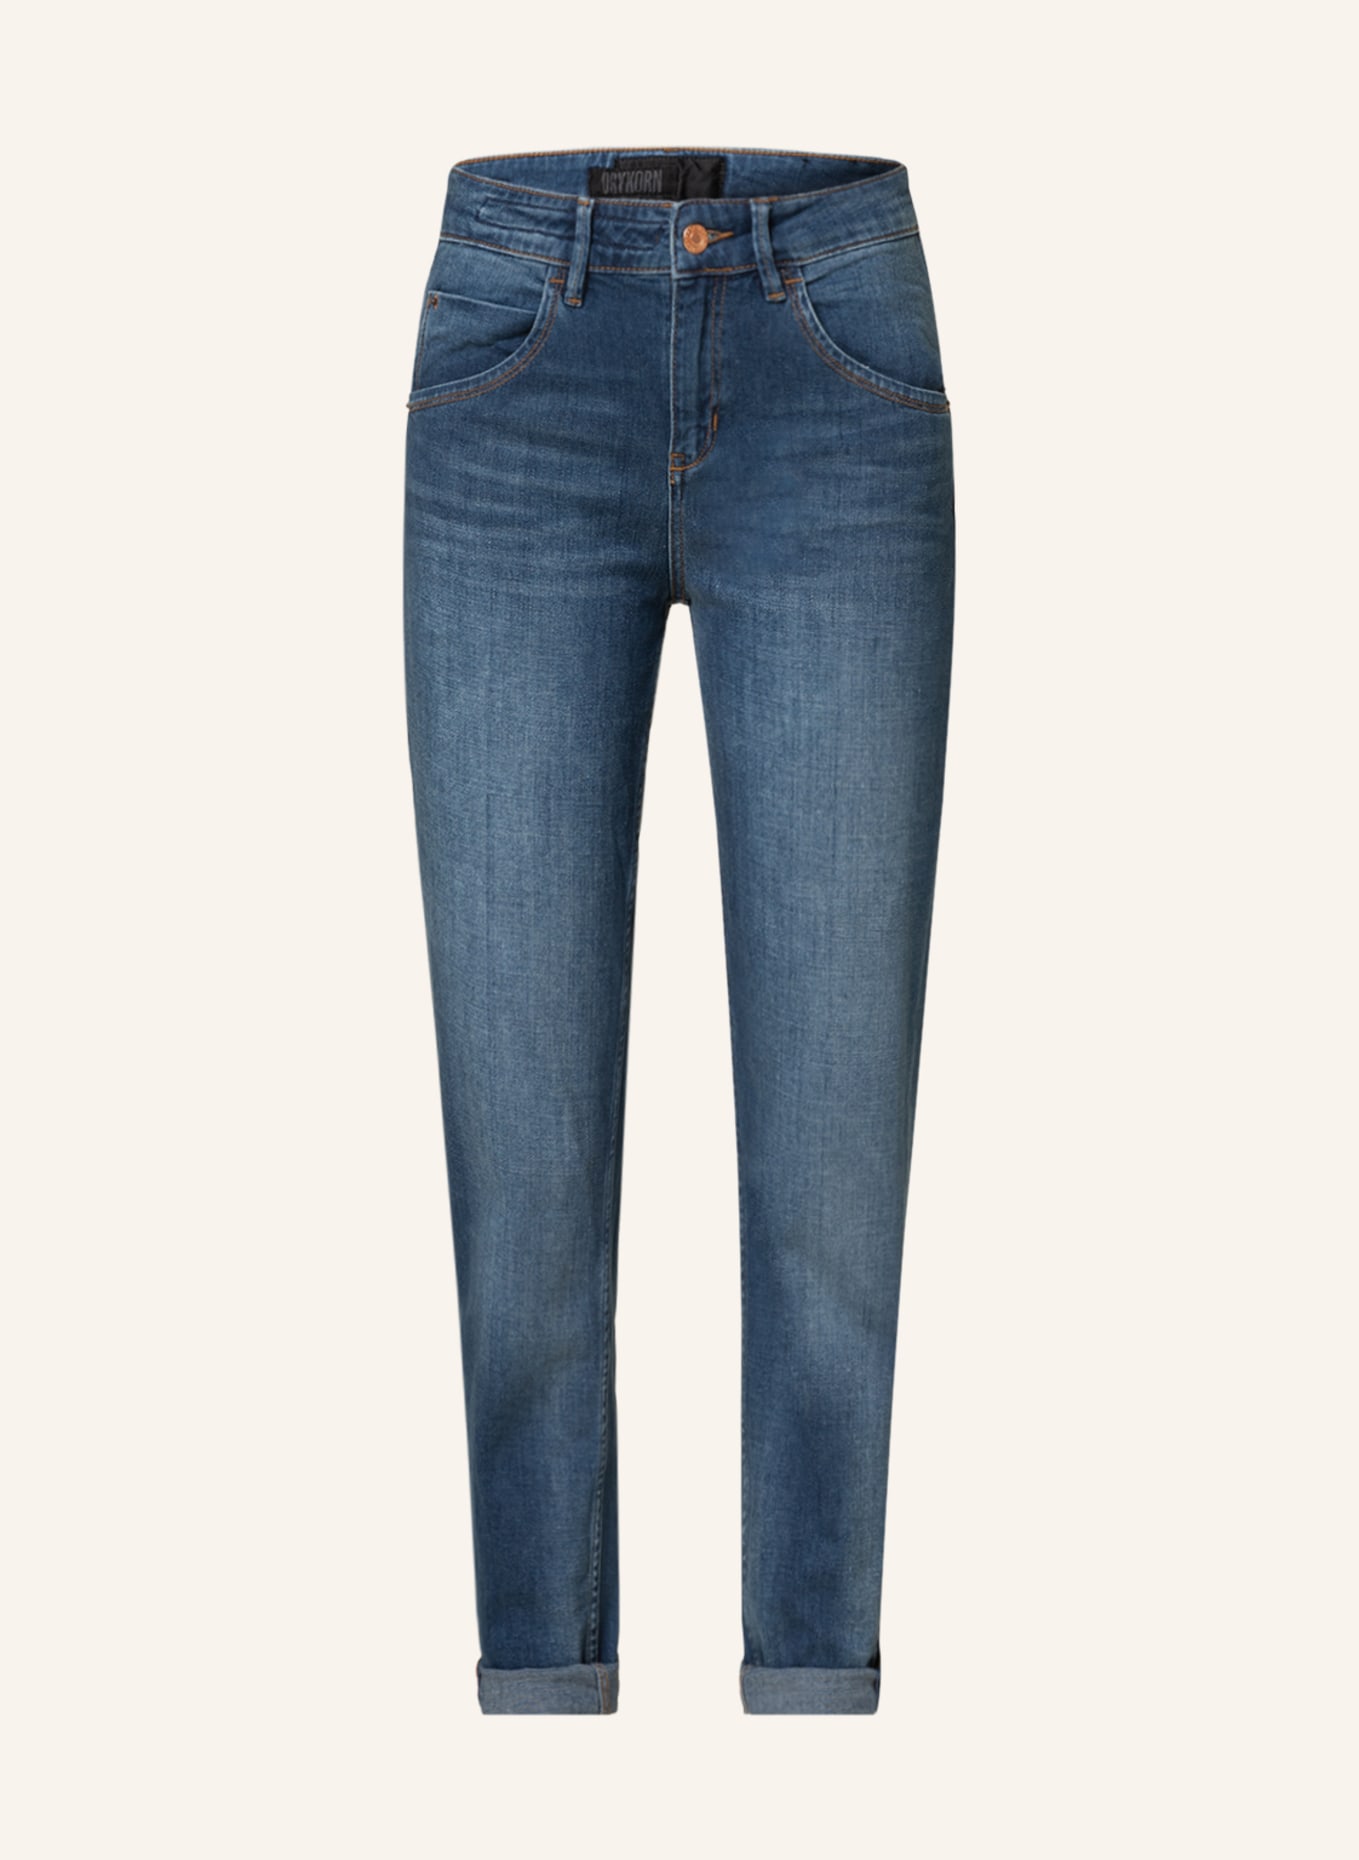 DRYKORN Jeans LIKE, Farbe: 3400 blau (Bild 1)